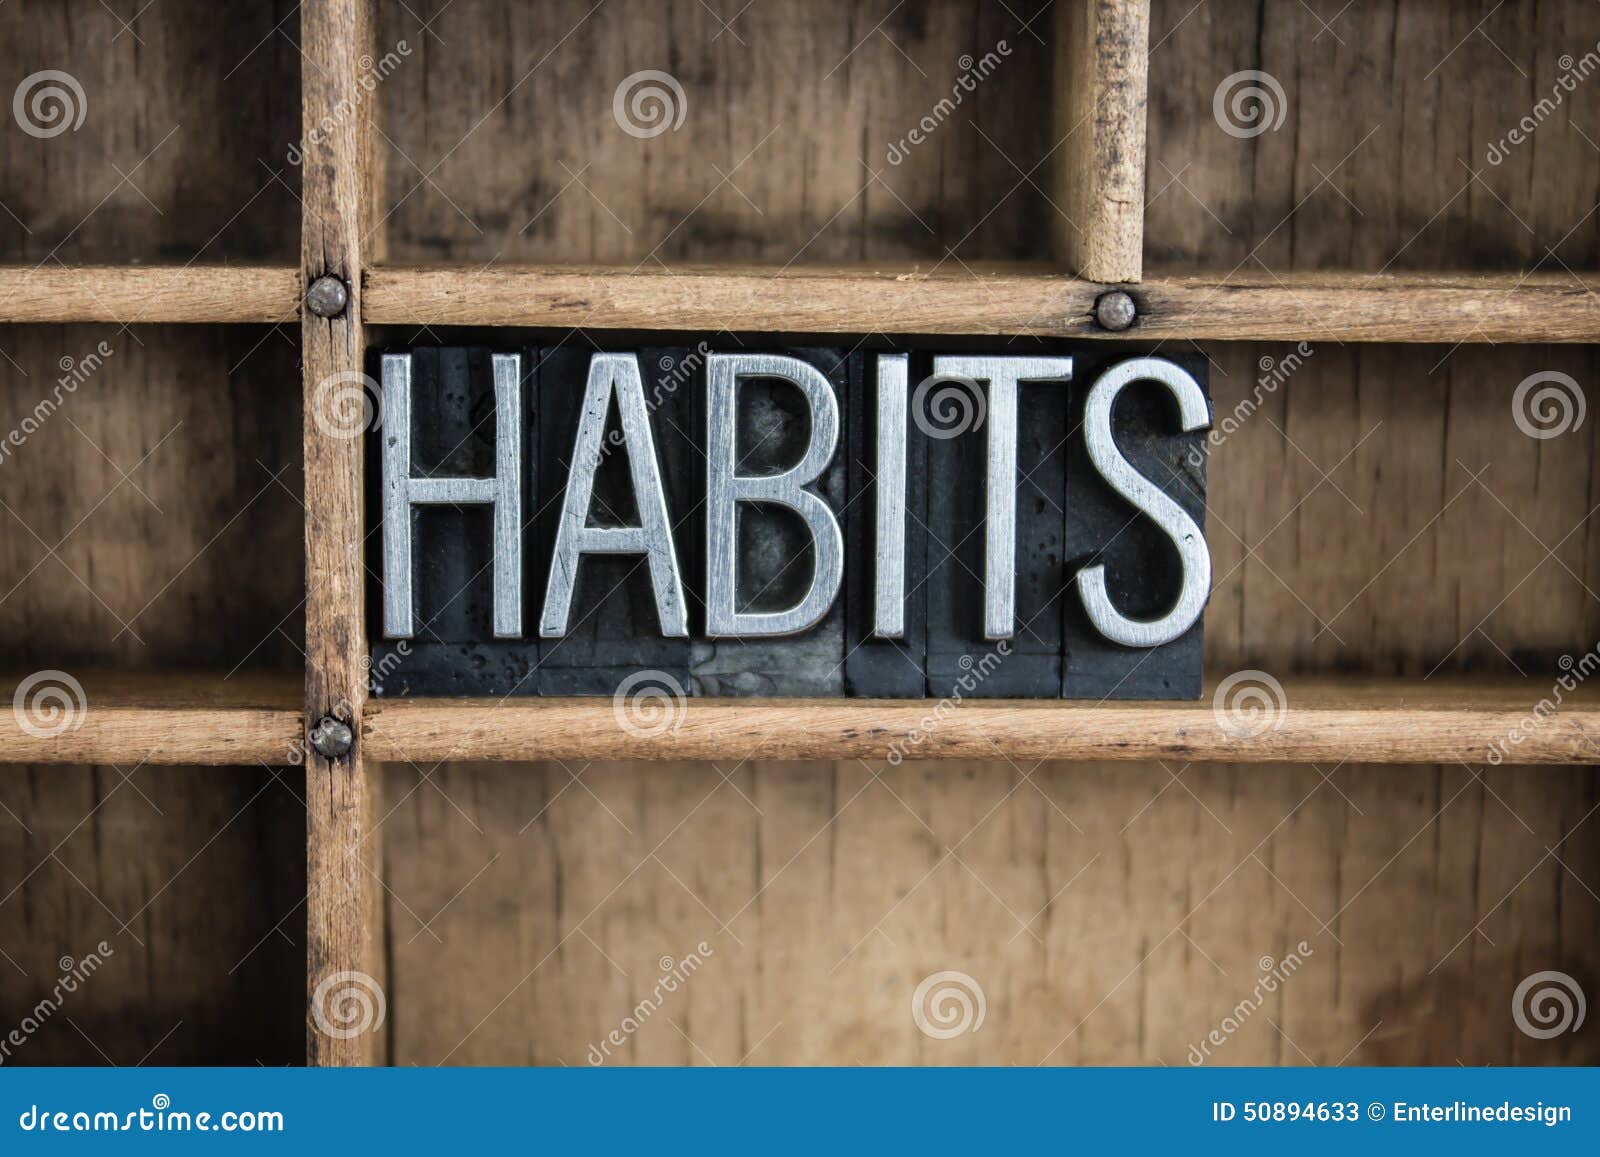 habits concept metal letterpress word in drawer